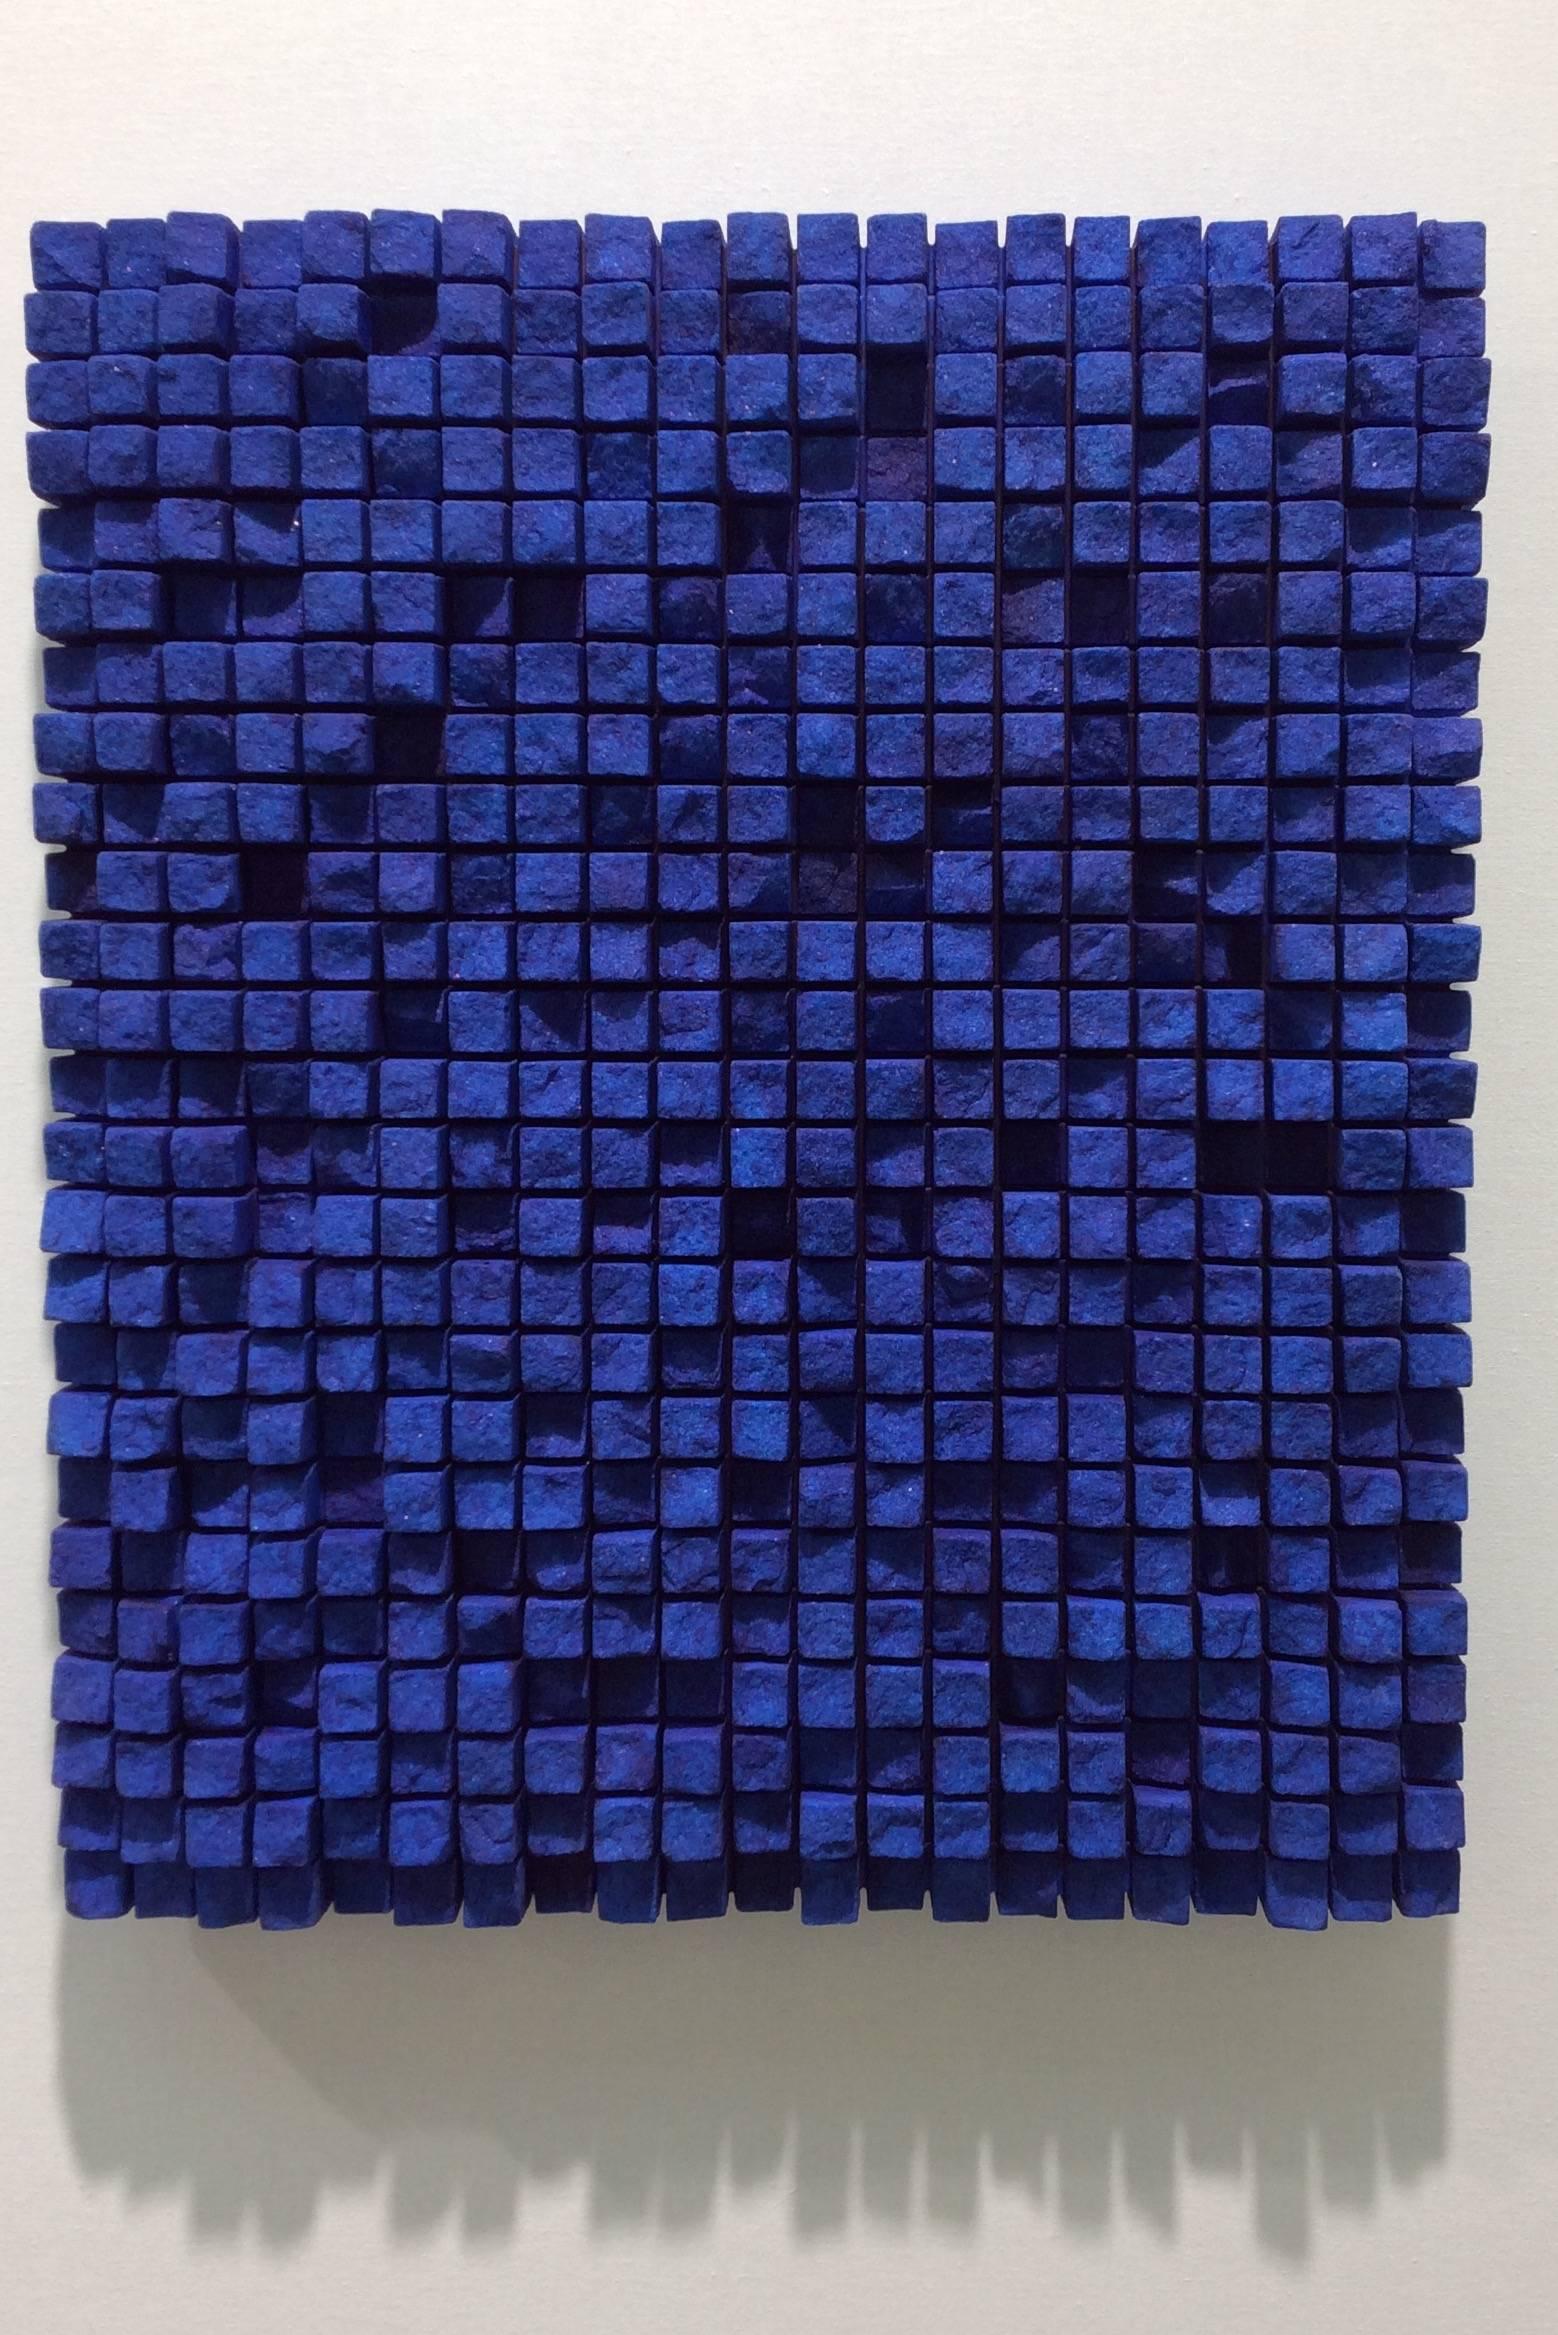 Untitled (Blue Marble) - Abstract Geometric Sculpture by Dieter Kränzlein